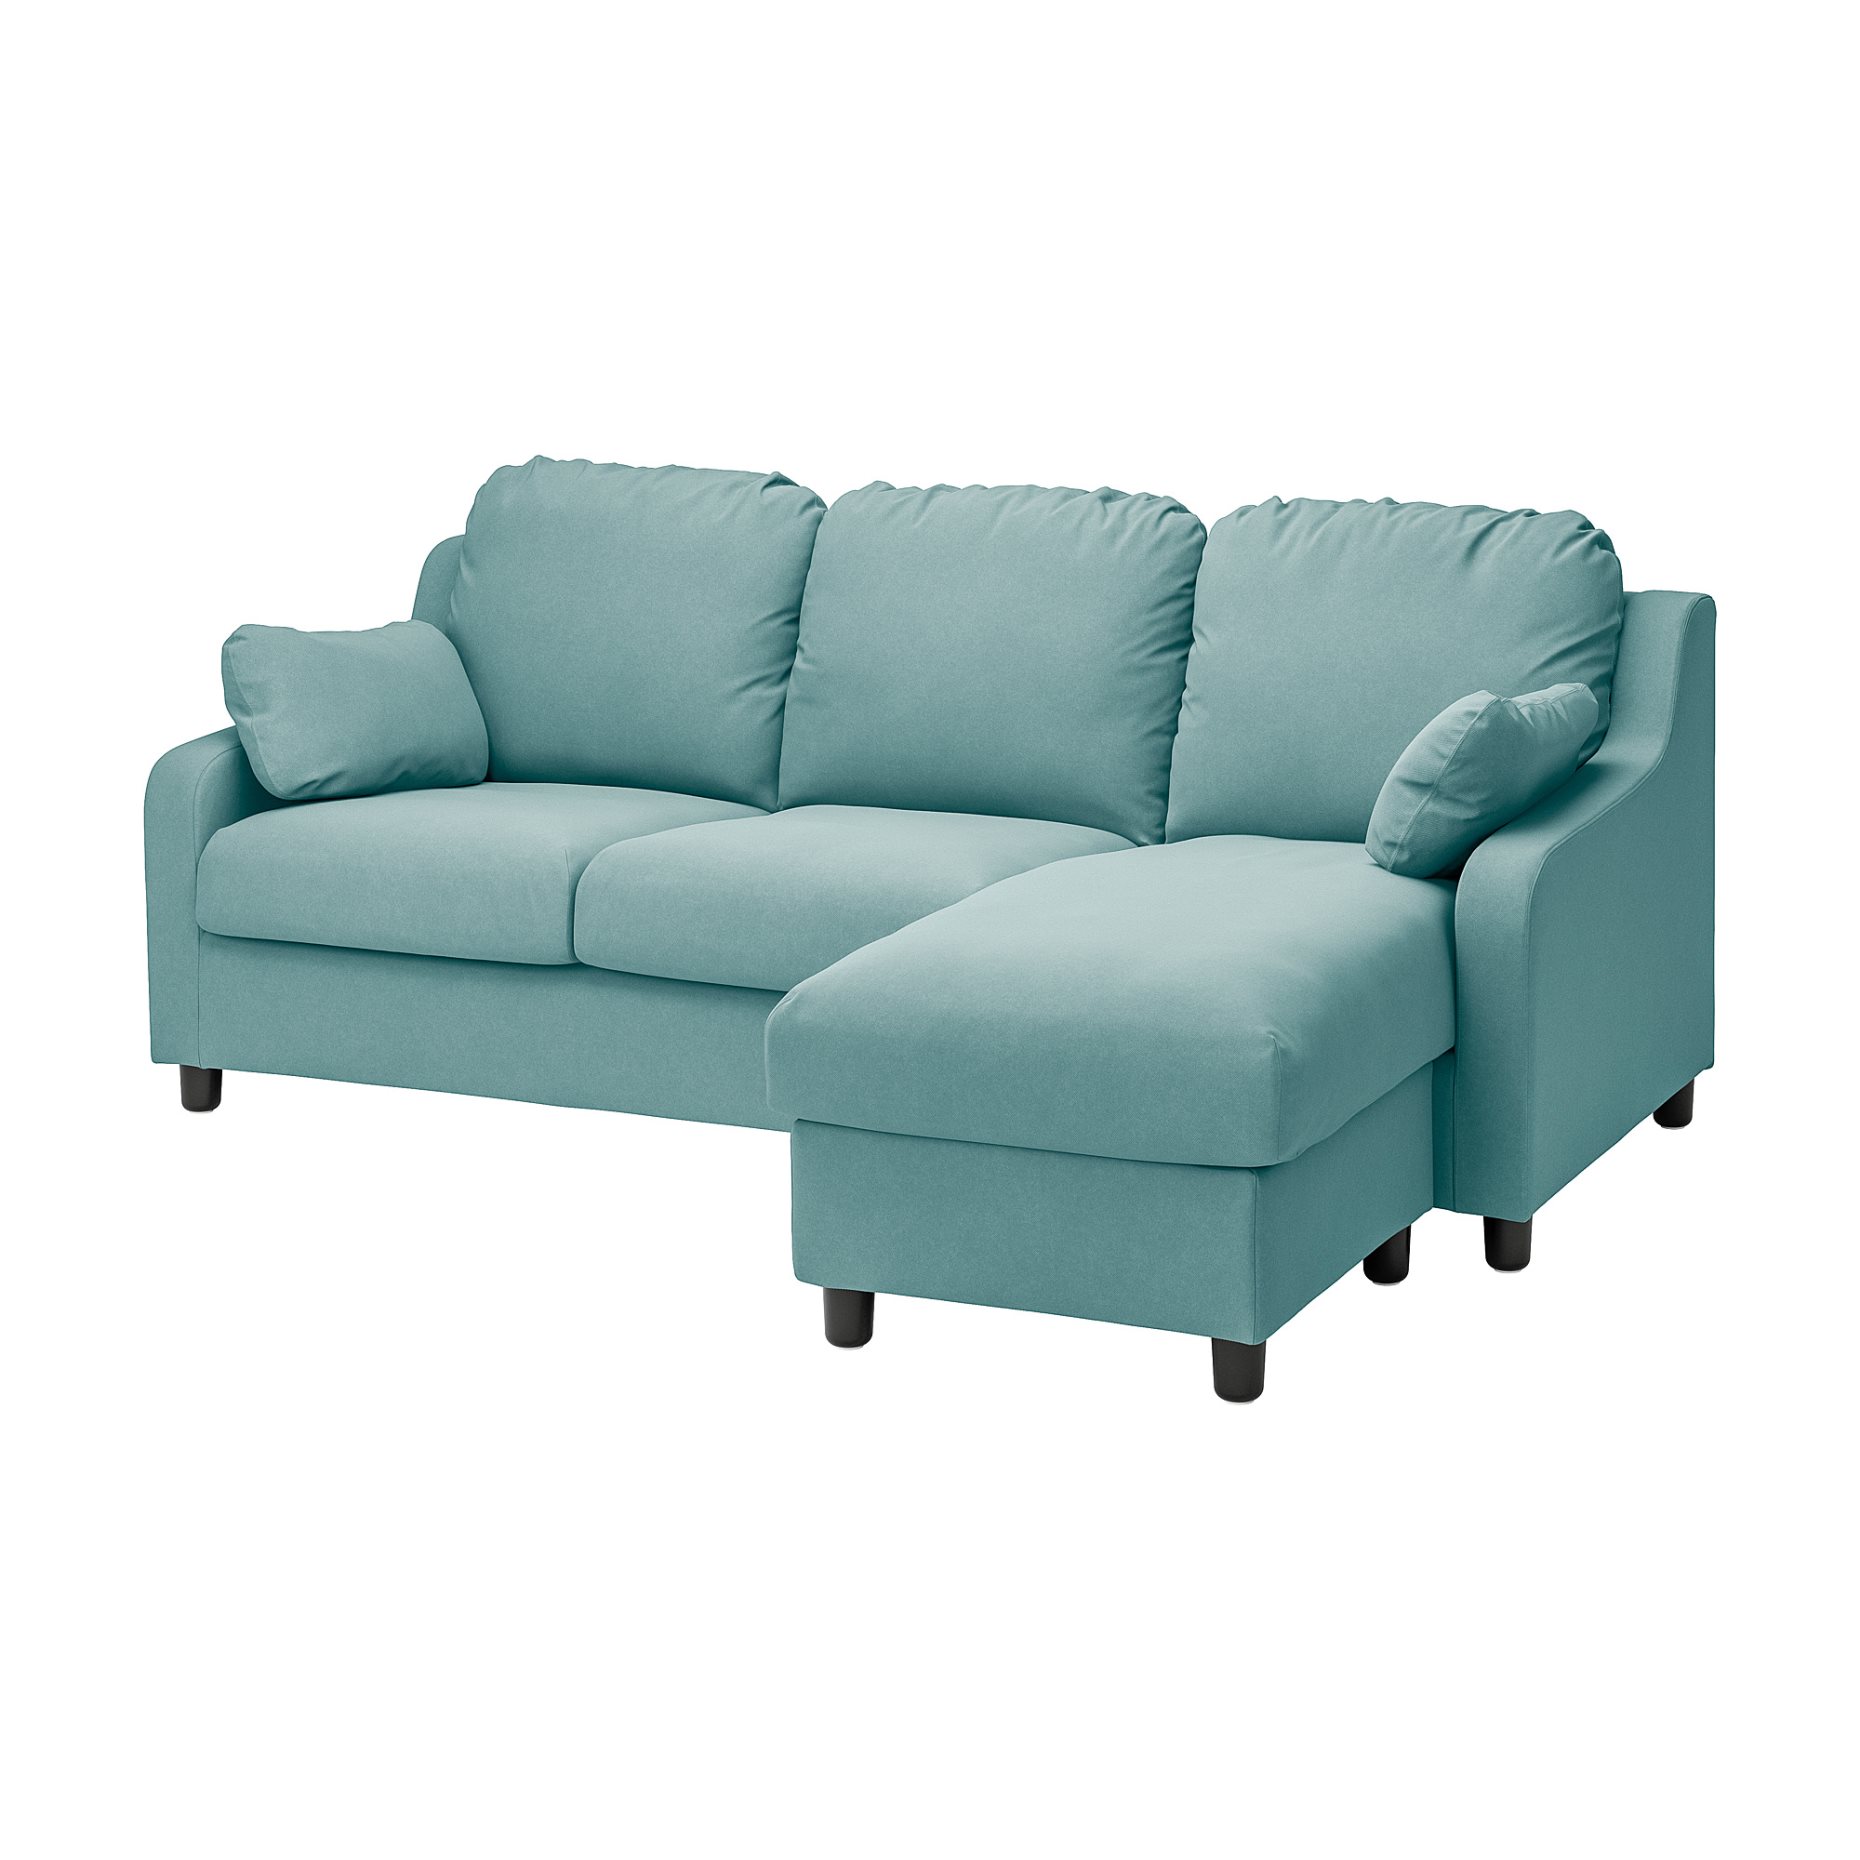 VINLIDEN, 3-seat sofa with chaise longue, 193.046.81